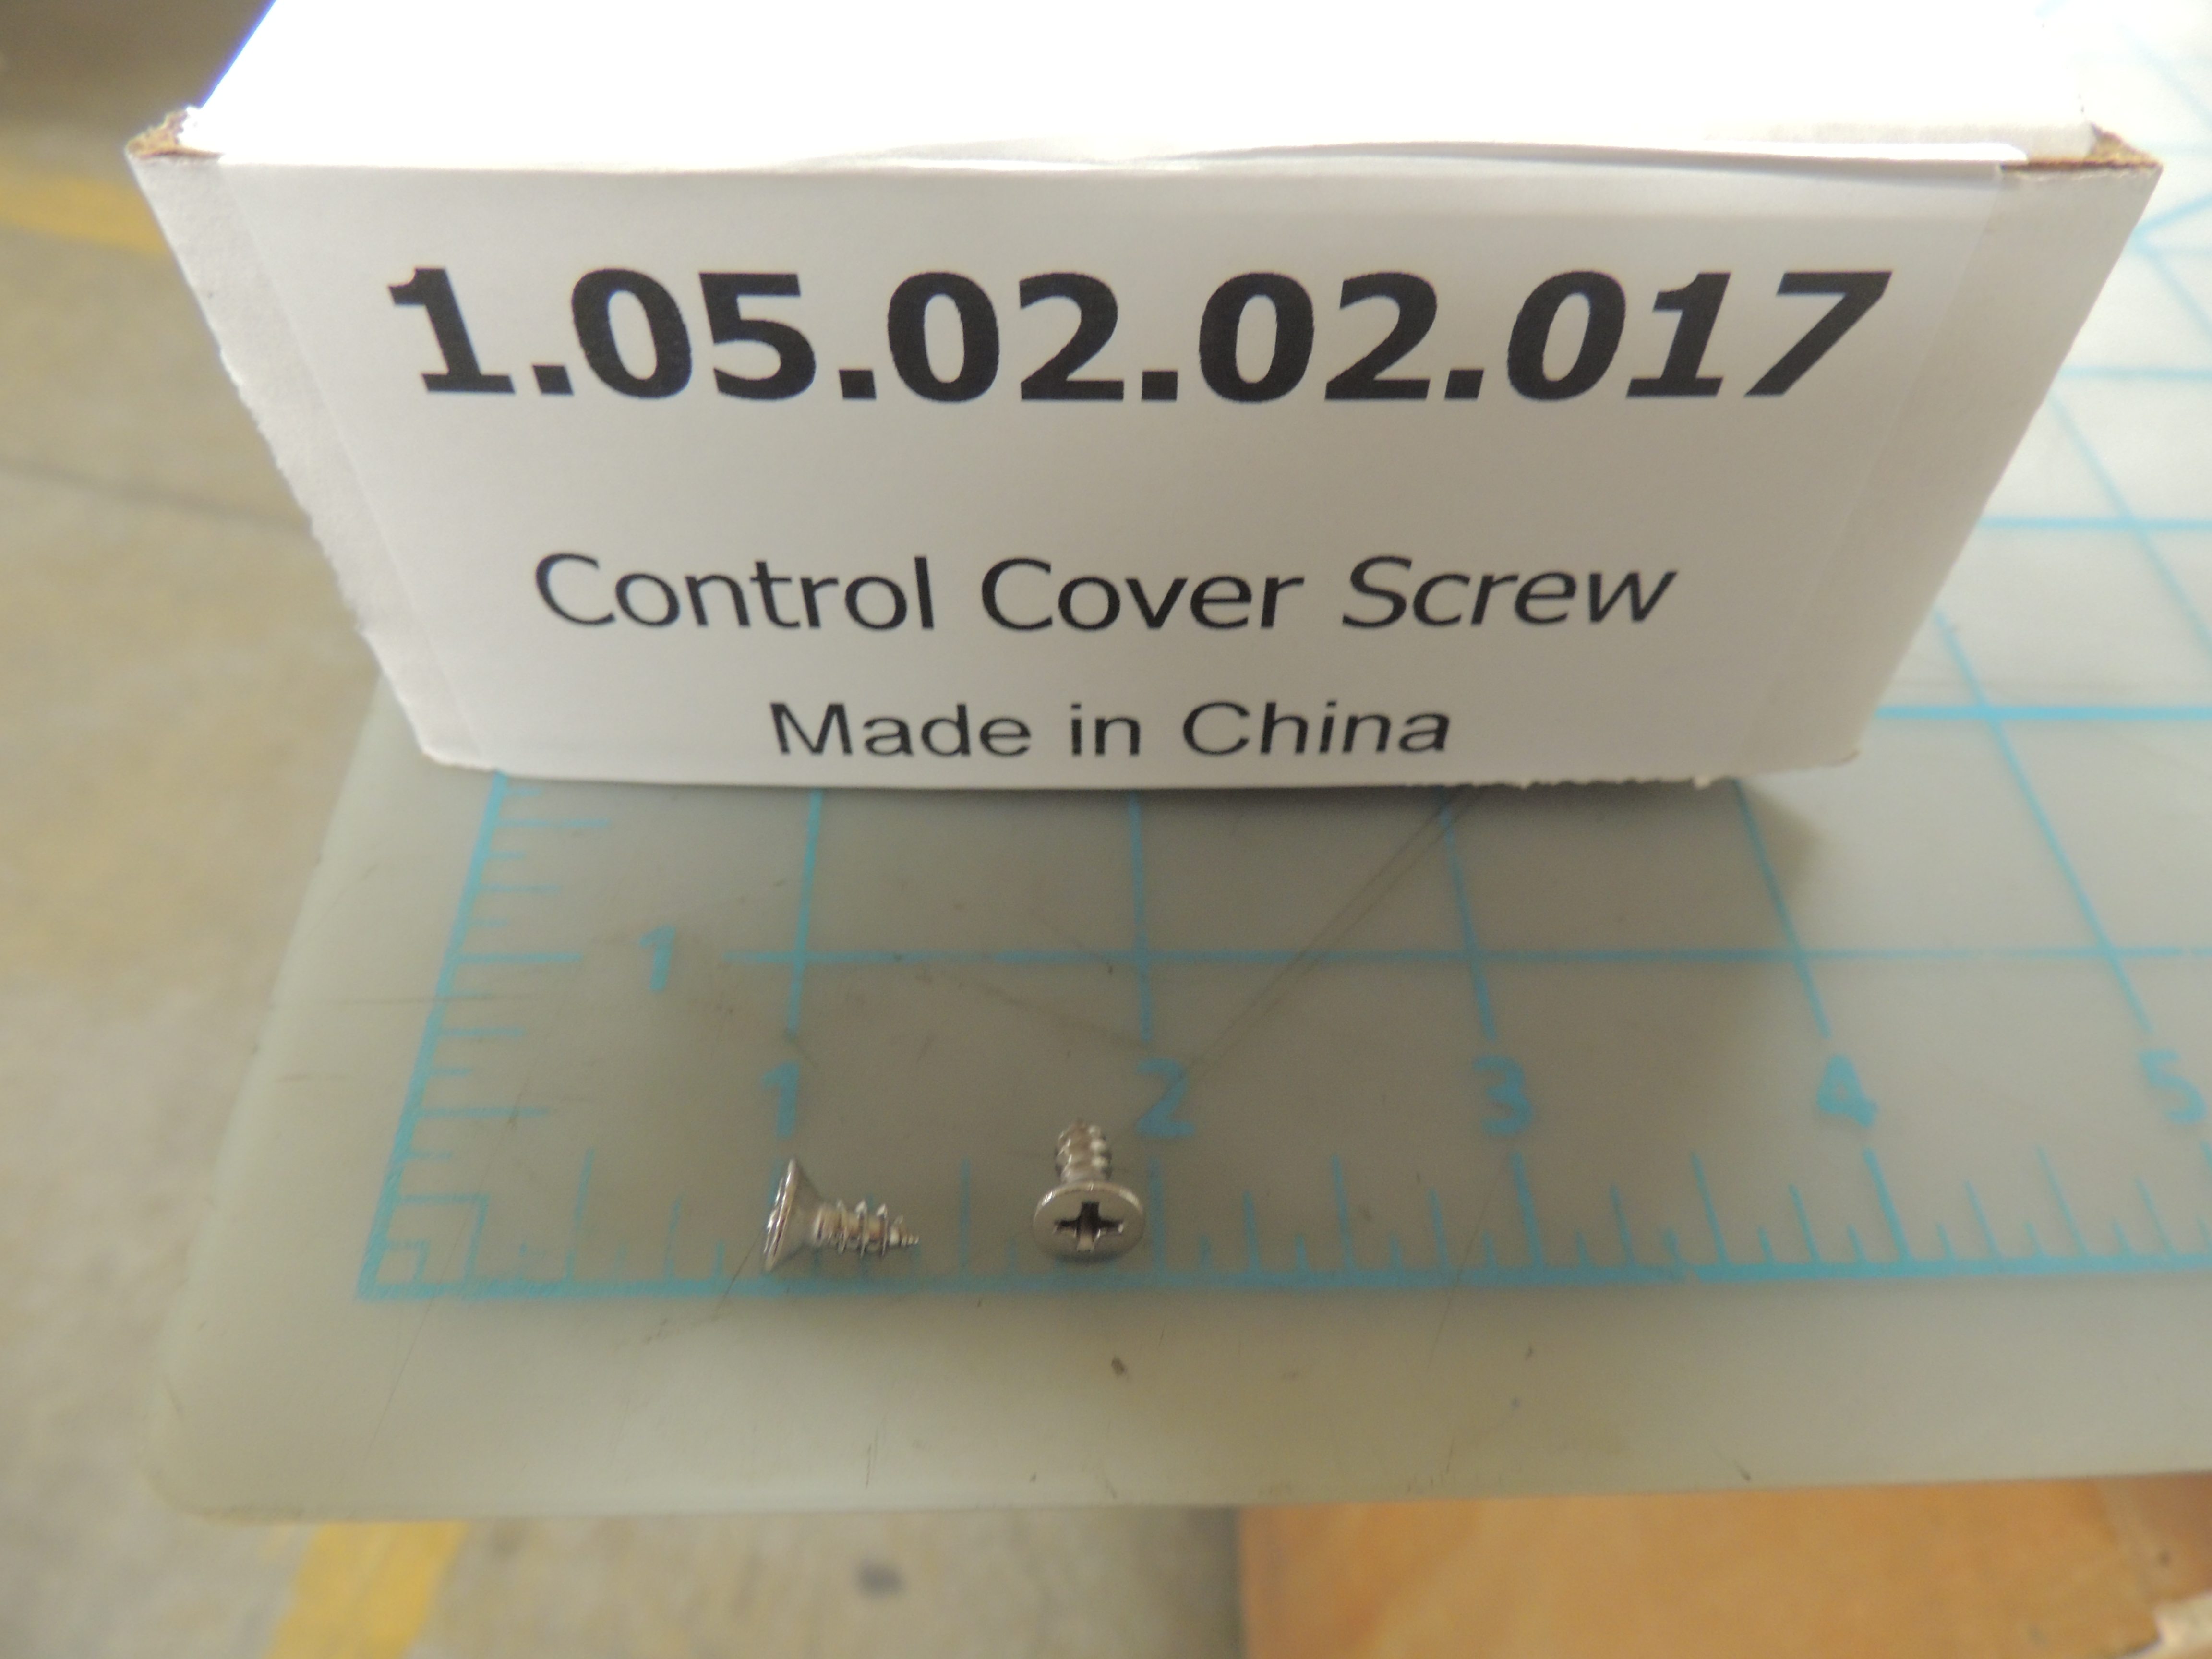 Control Cover Screw